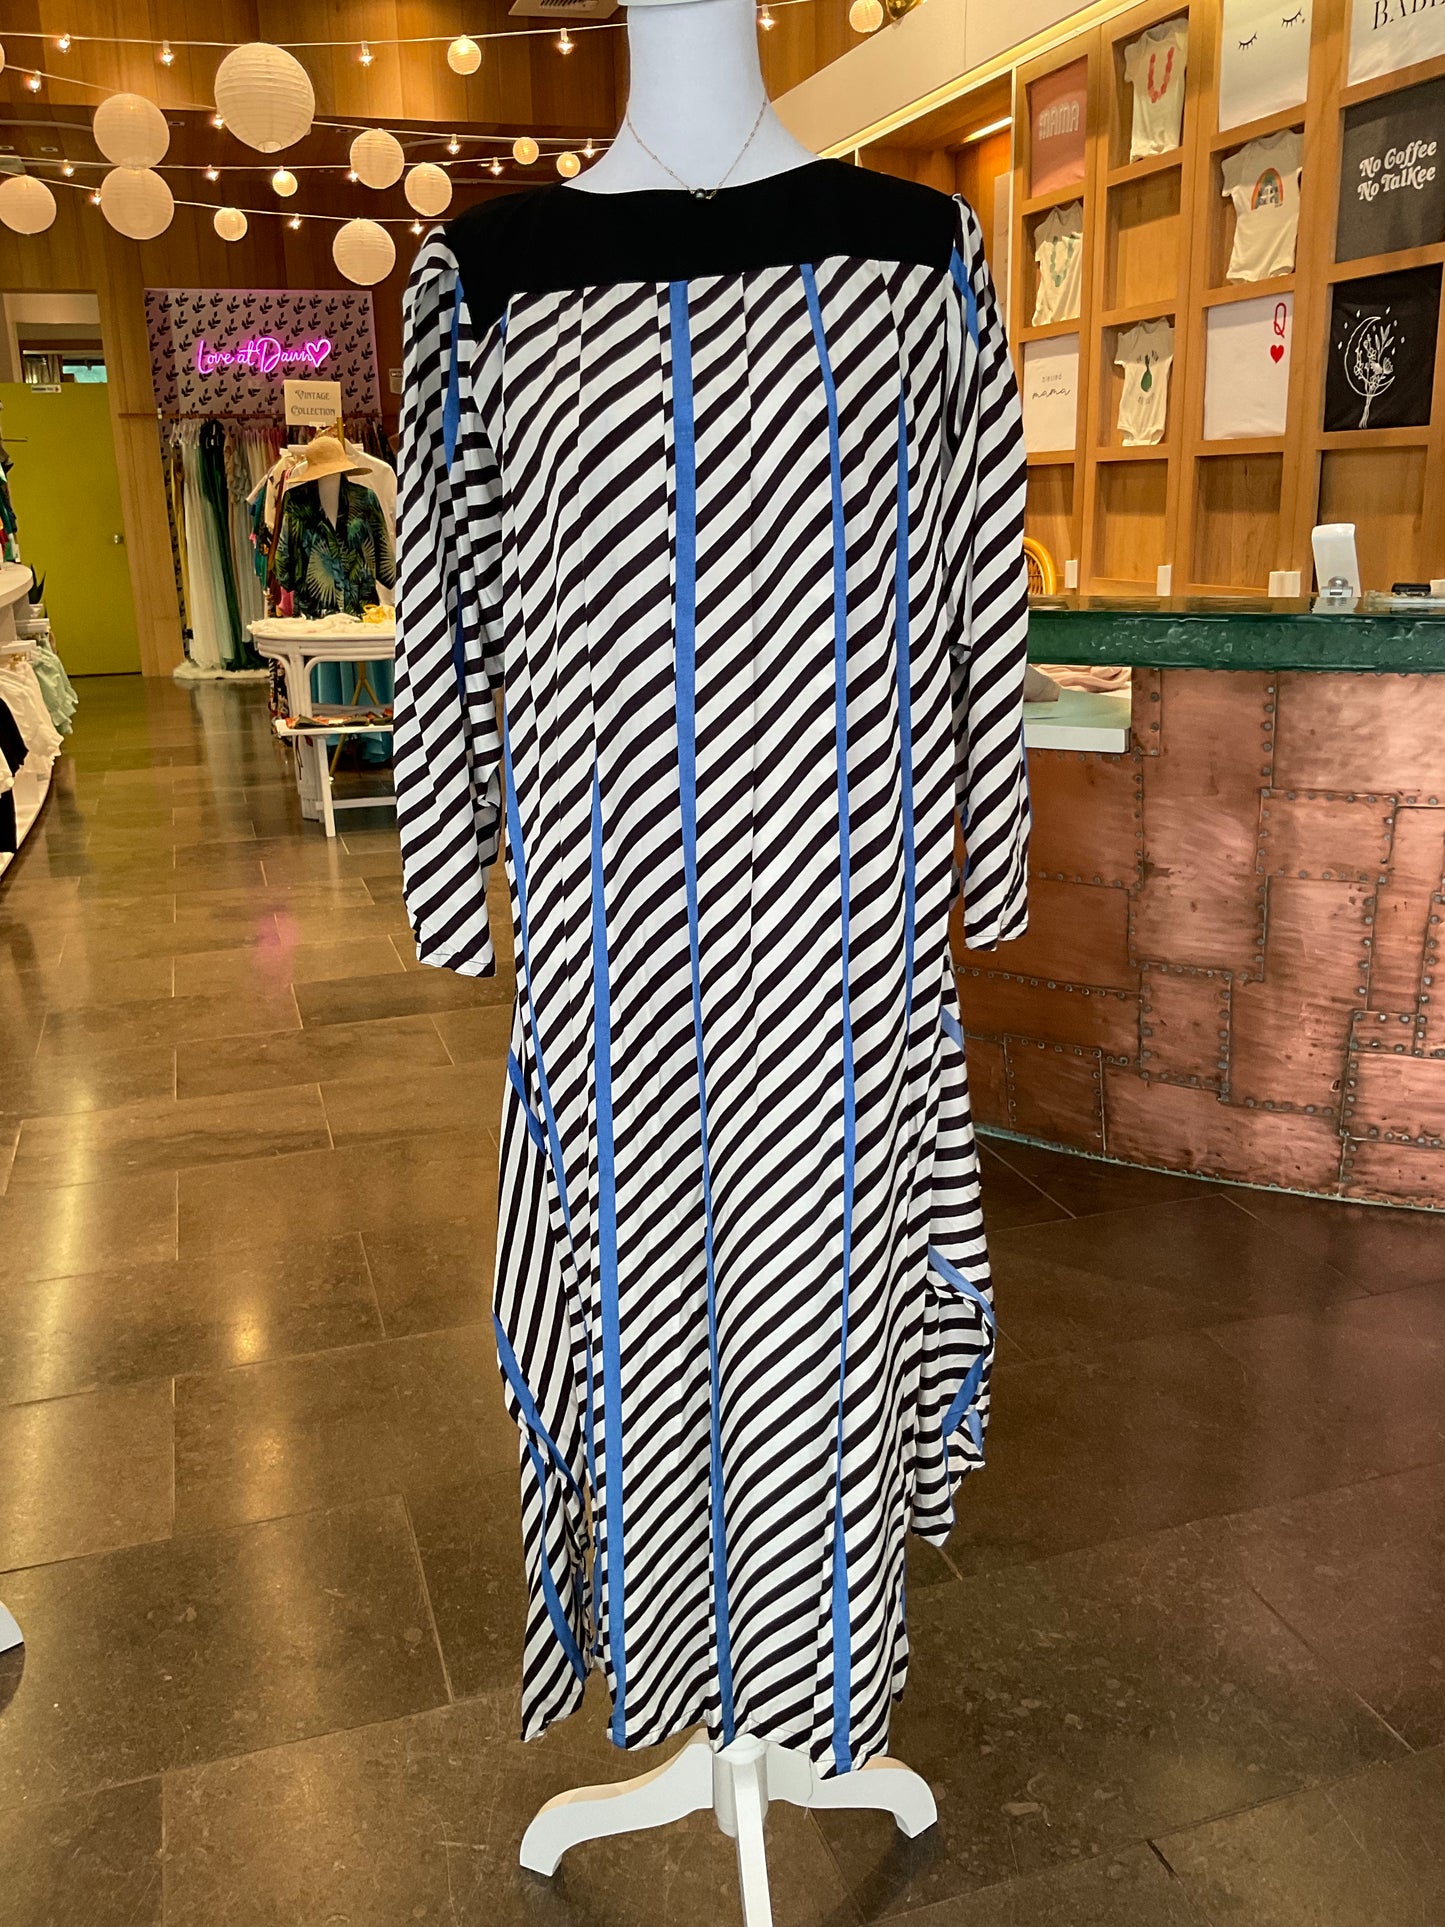 Vintage Dress ~ Blue zebra